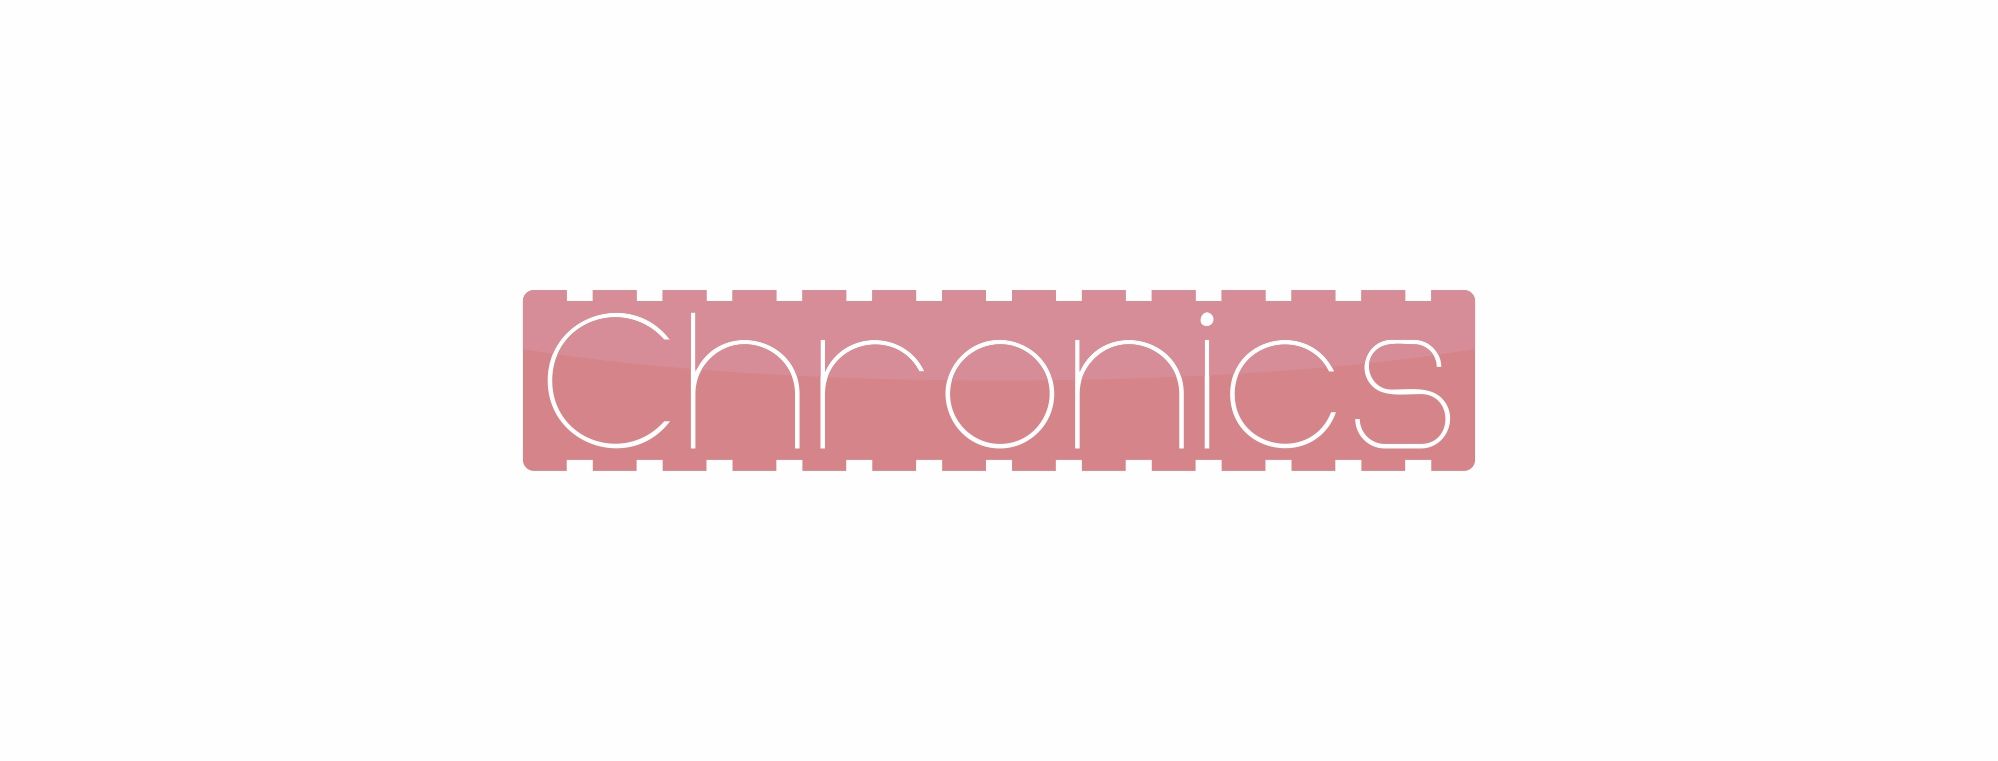 Логотип сервиса Chronics - дизайнер timur_na